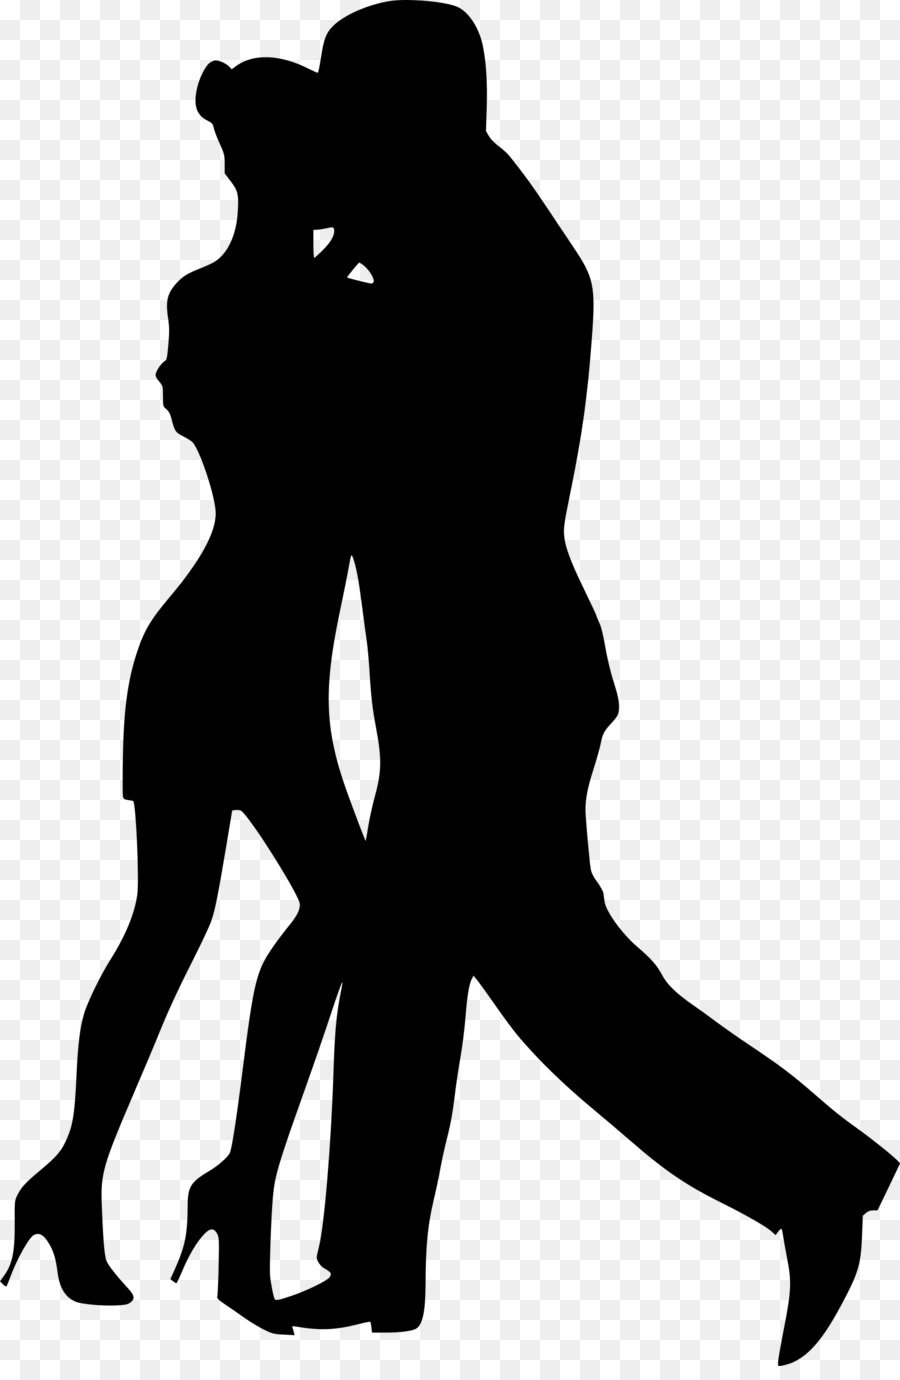 Silhouette Street dance Clip art - couple png download - 1581*2400 - Free Transparent Silhouette png Download.